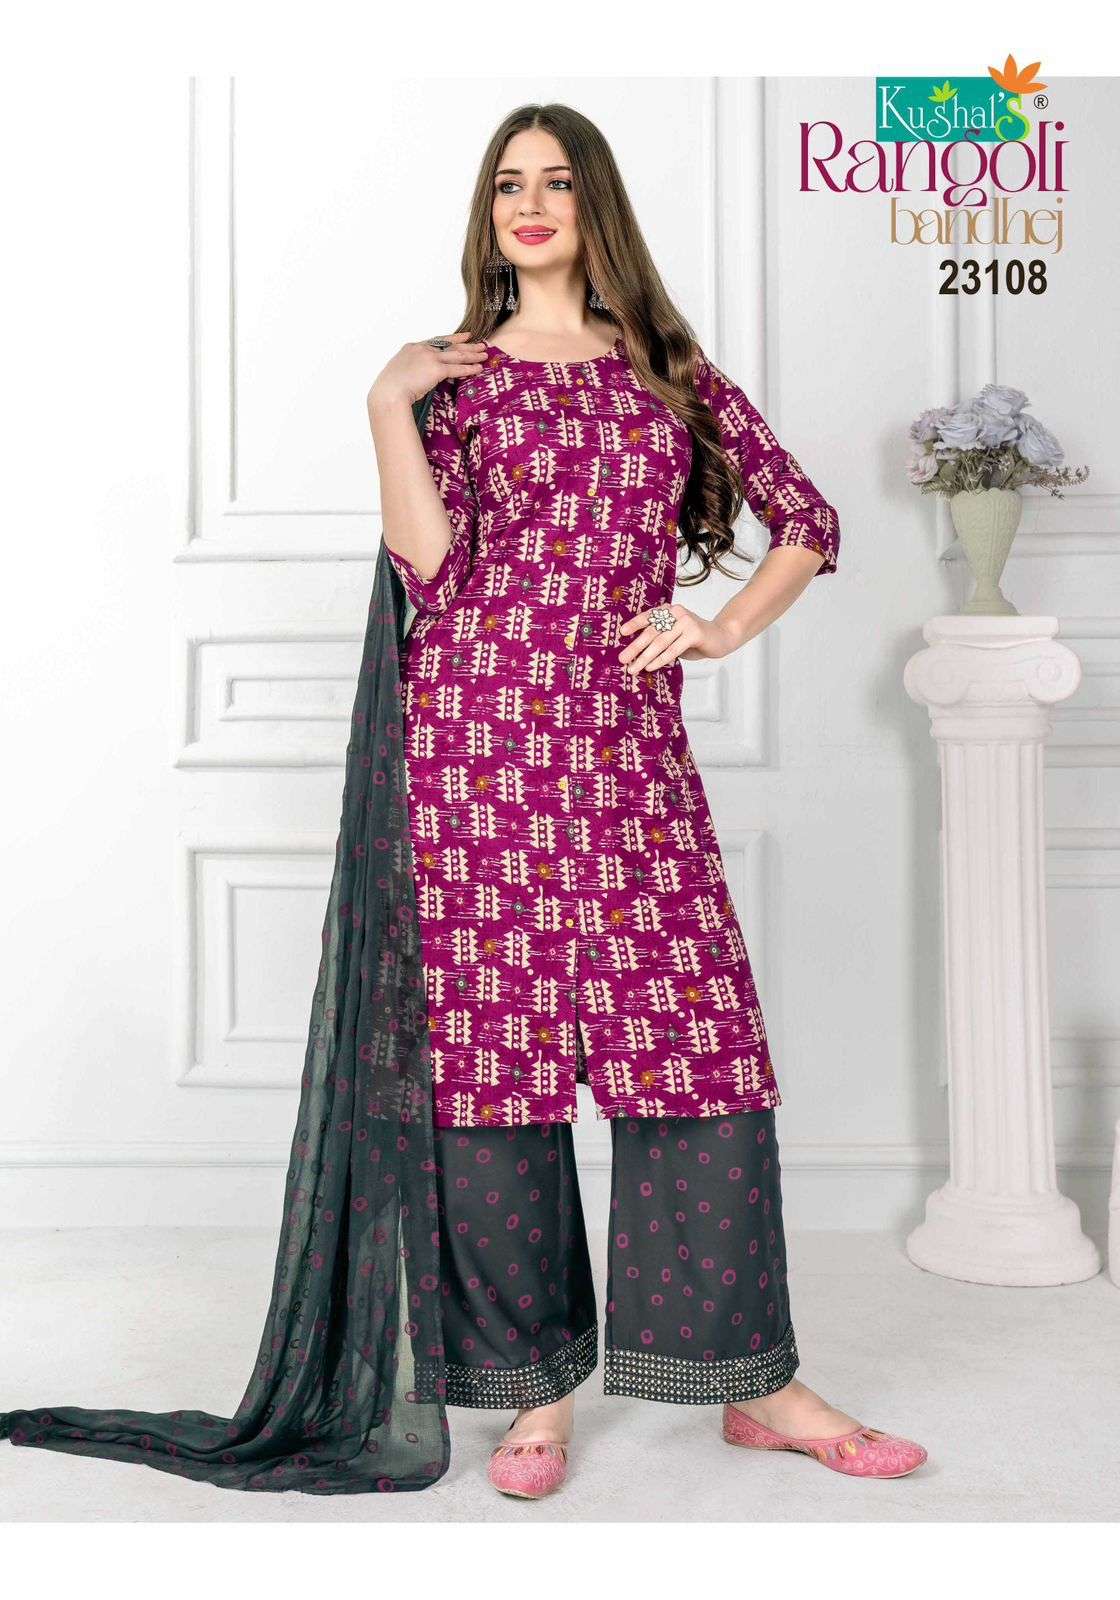 kushals rangoli 23001-23010 series rayon designer kurtis catalogue wholesale price surat